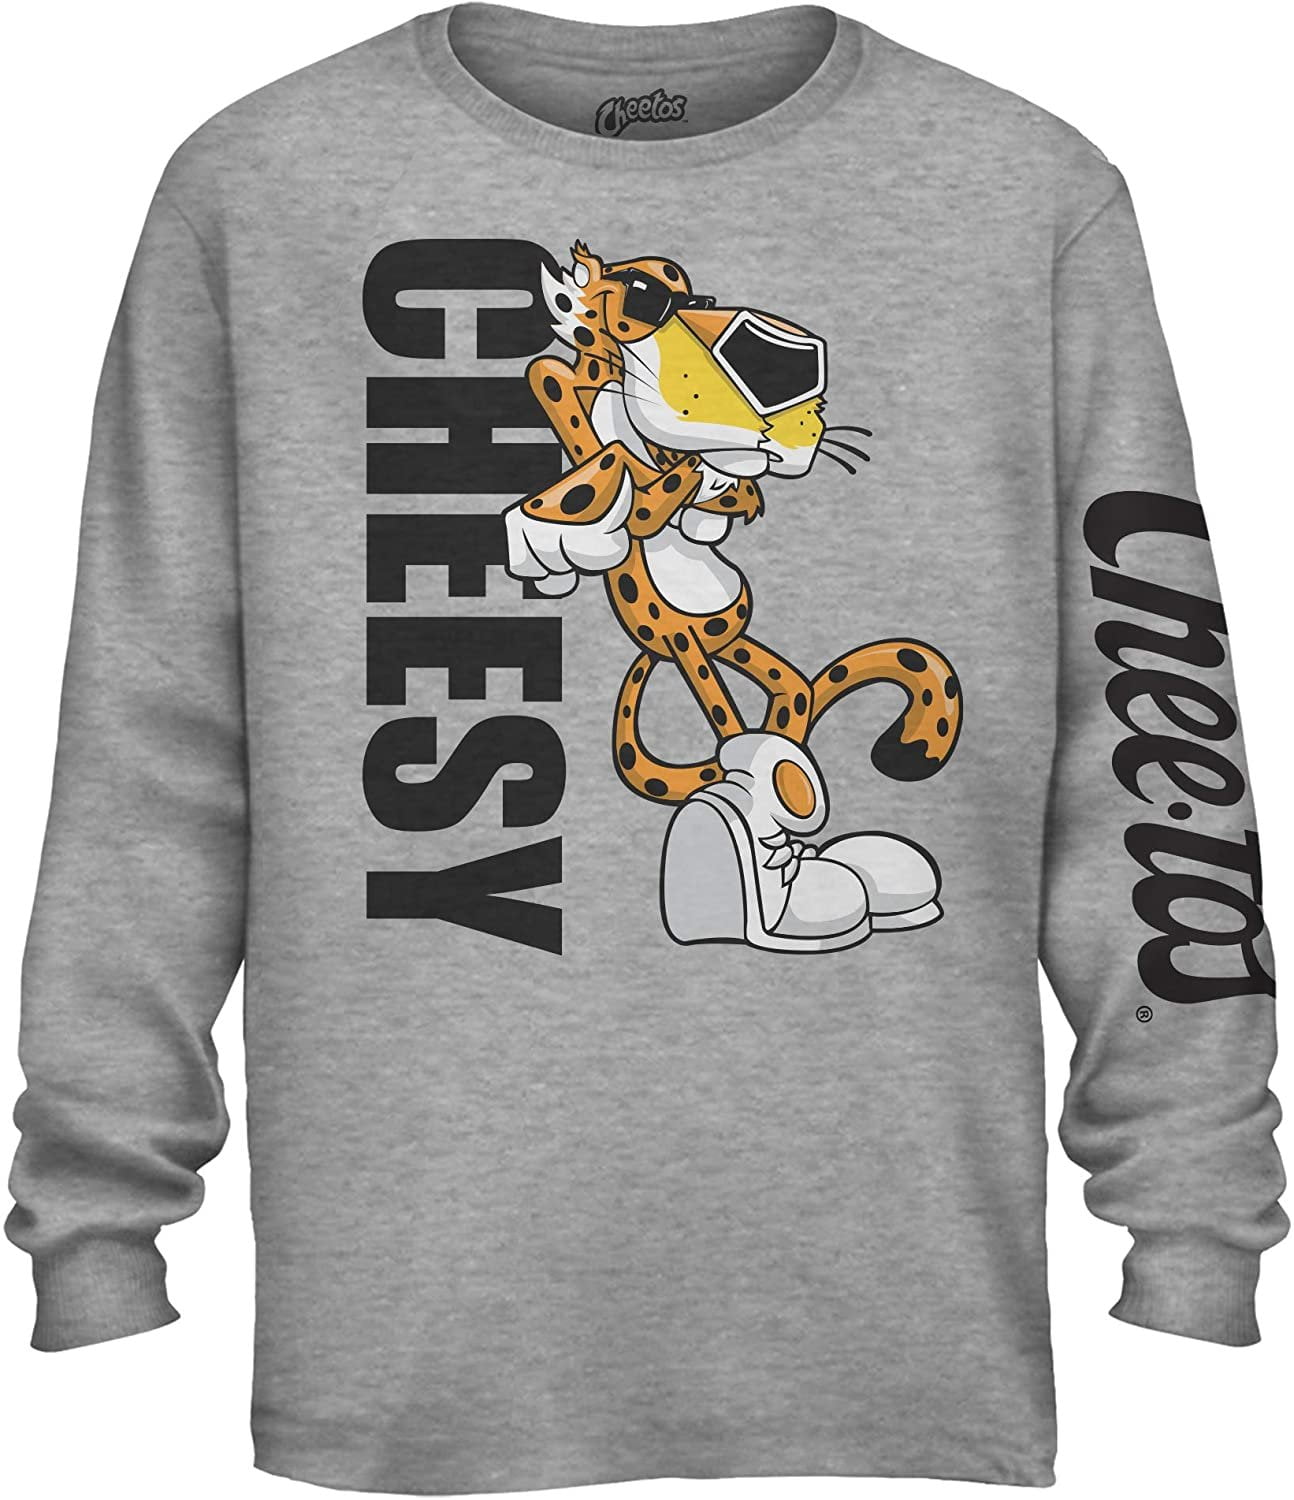 Chester Cheetah Frito-lay's Cheetos Brand Mascot Chips Brand Logo Fan T Shirt 